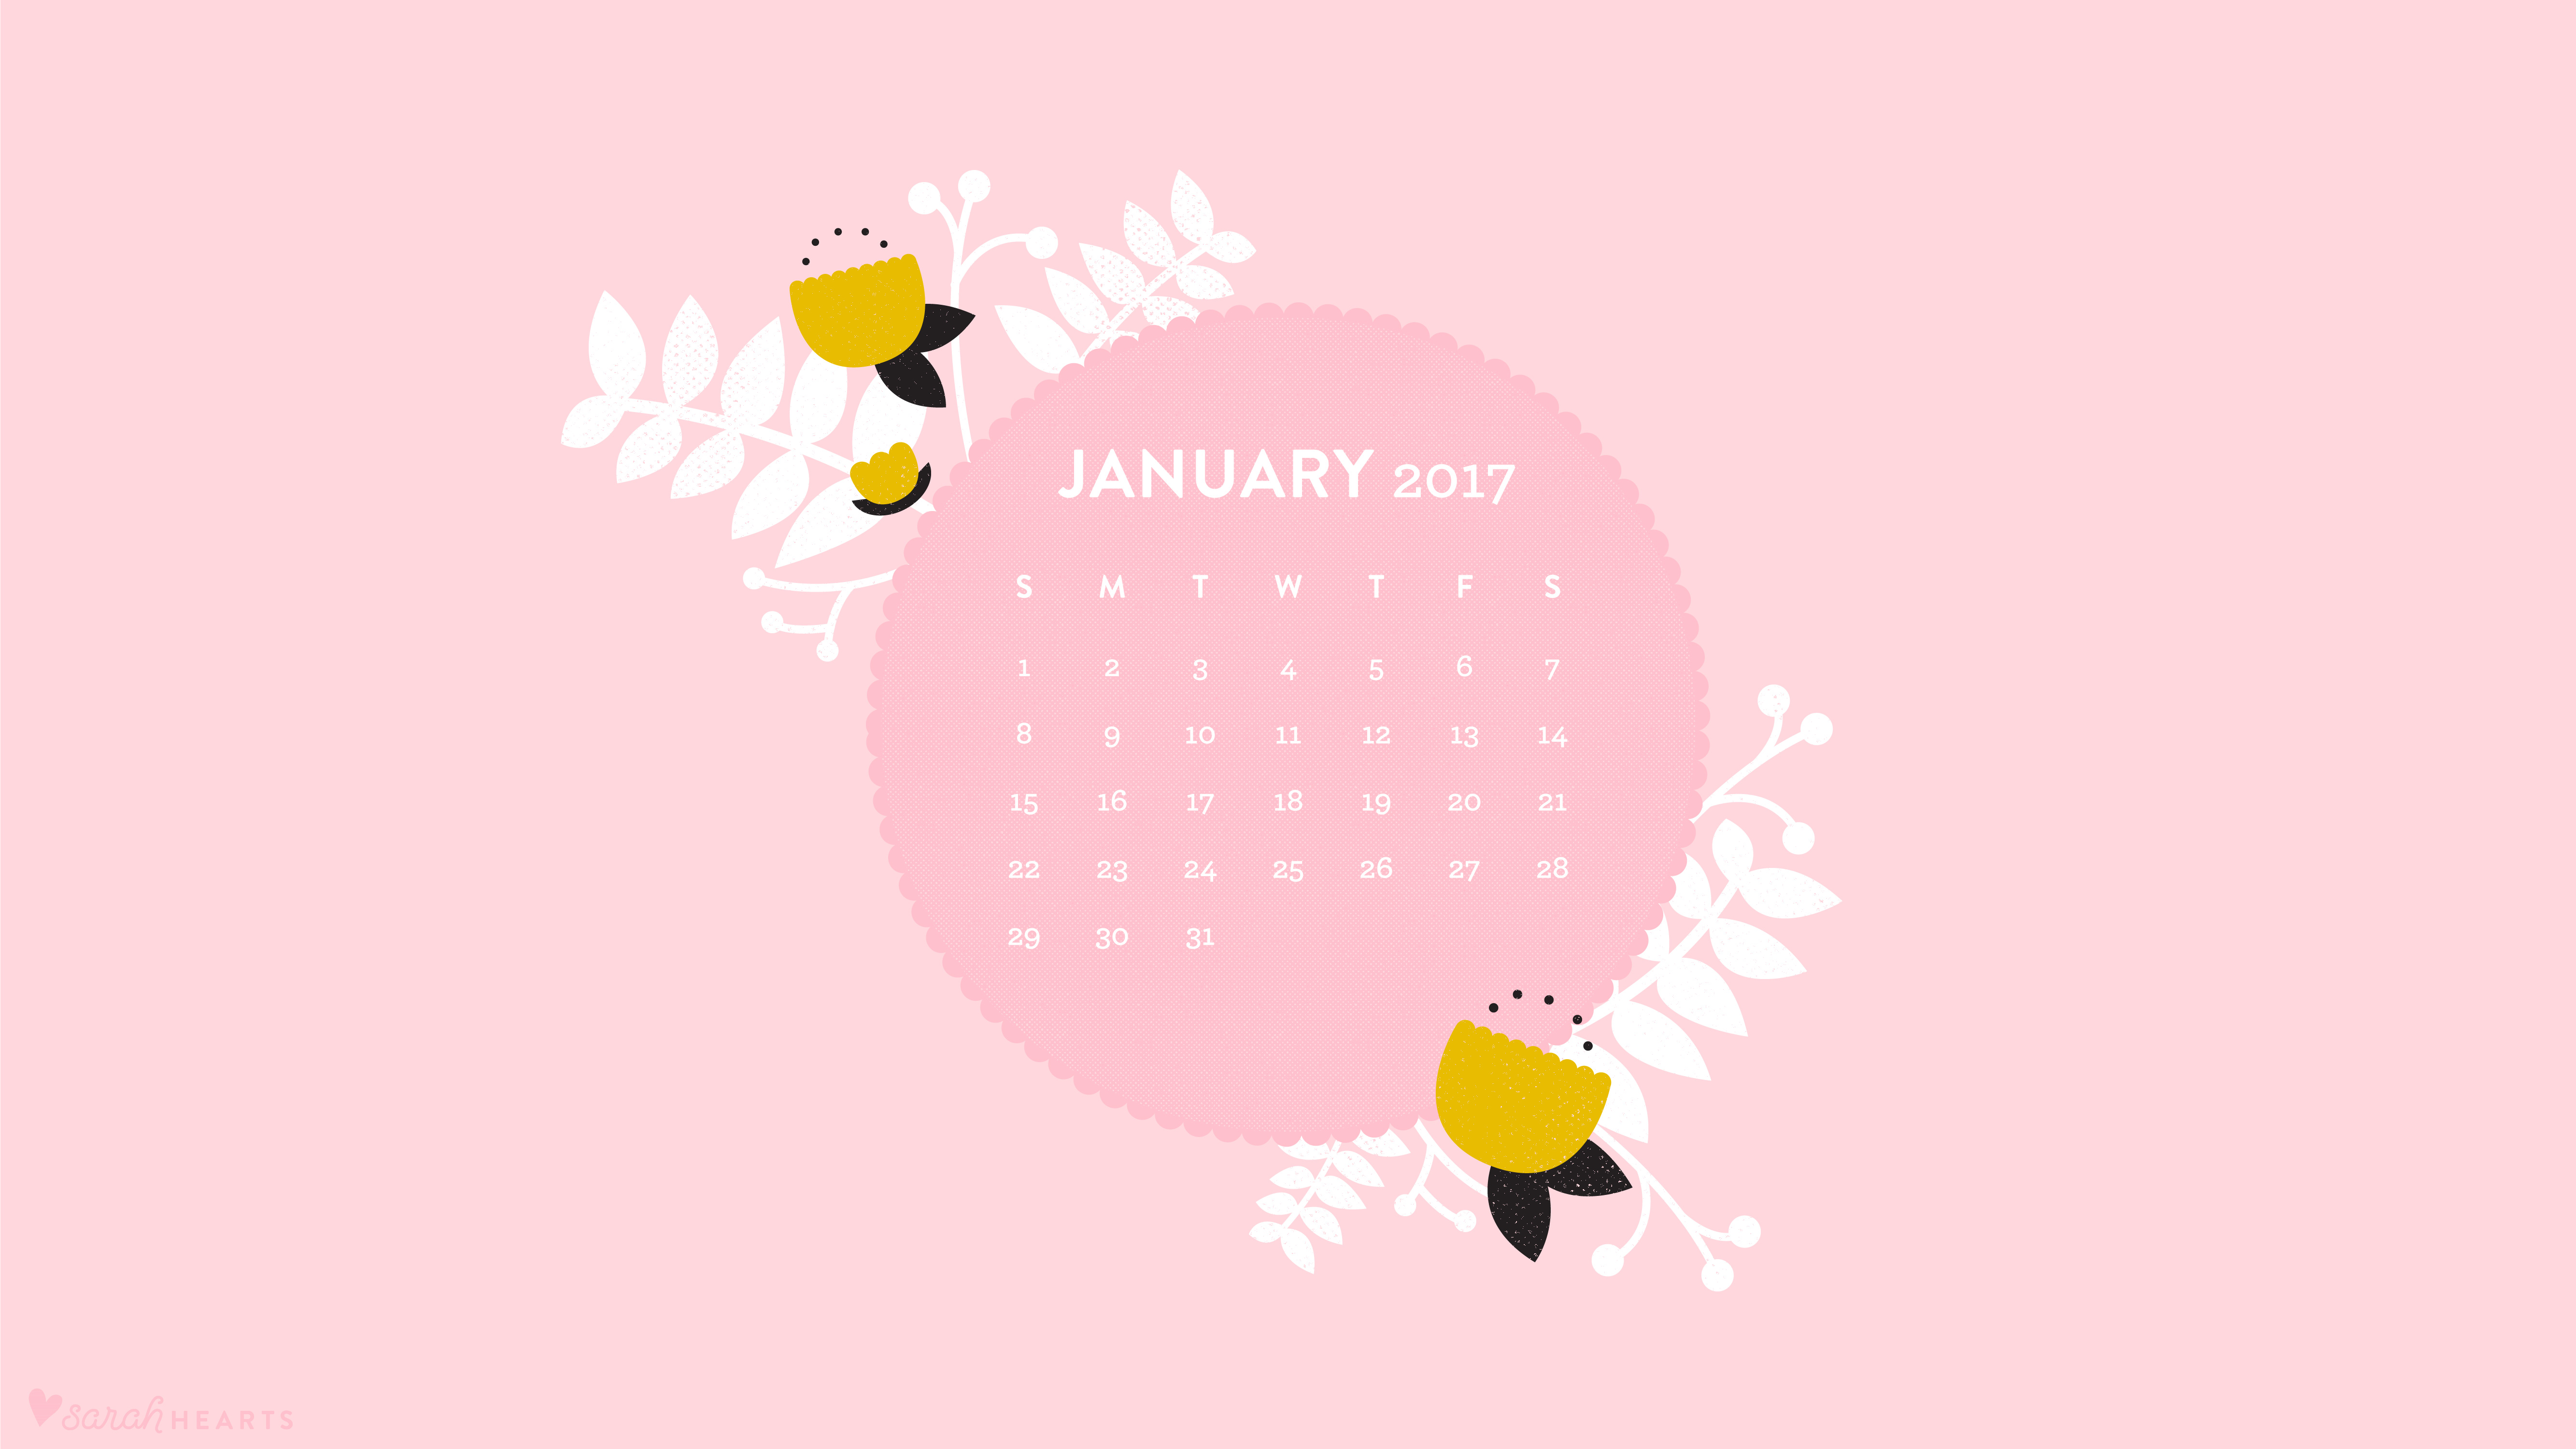 January 2017 Calendar Wallpaper - Sarah Hearts